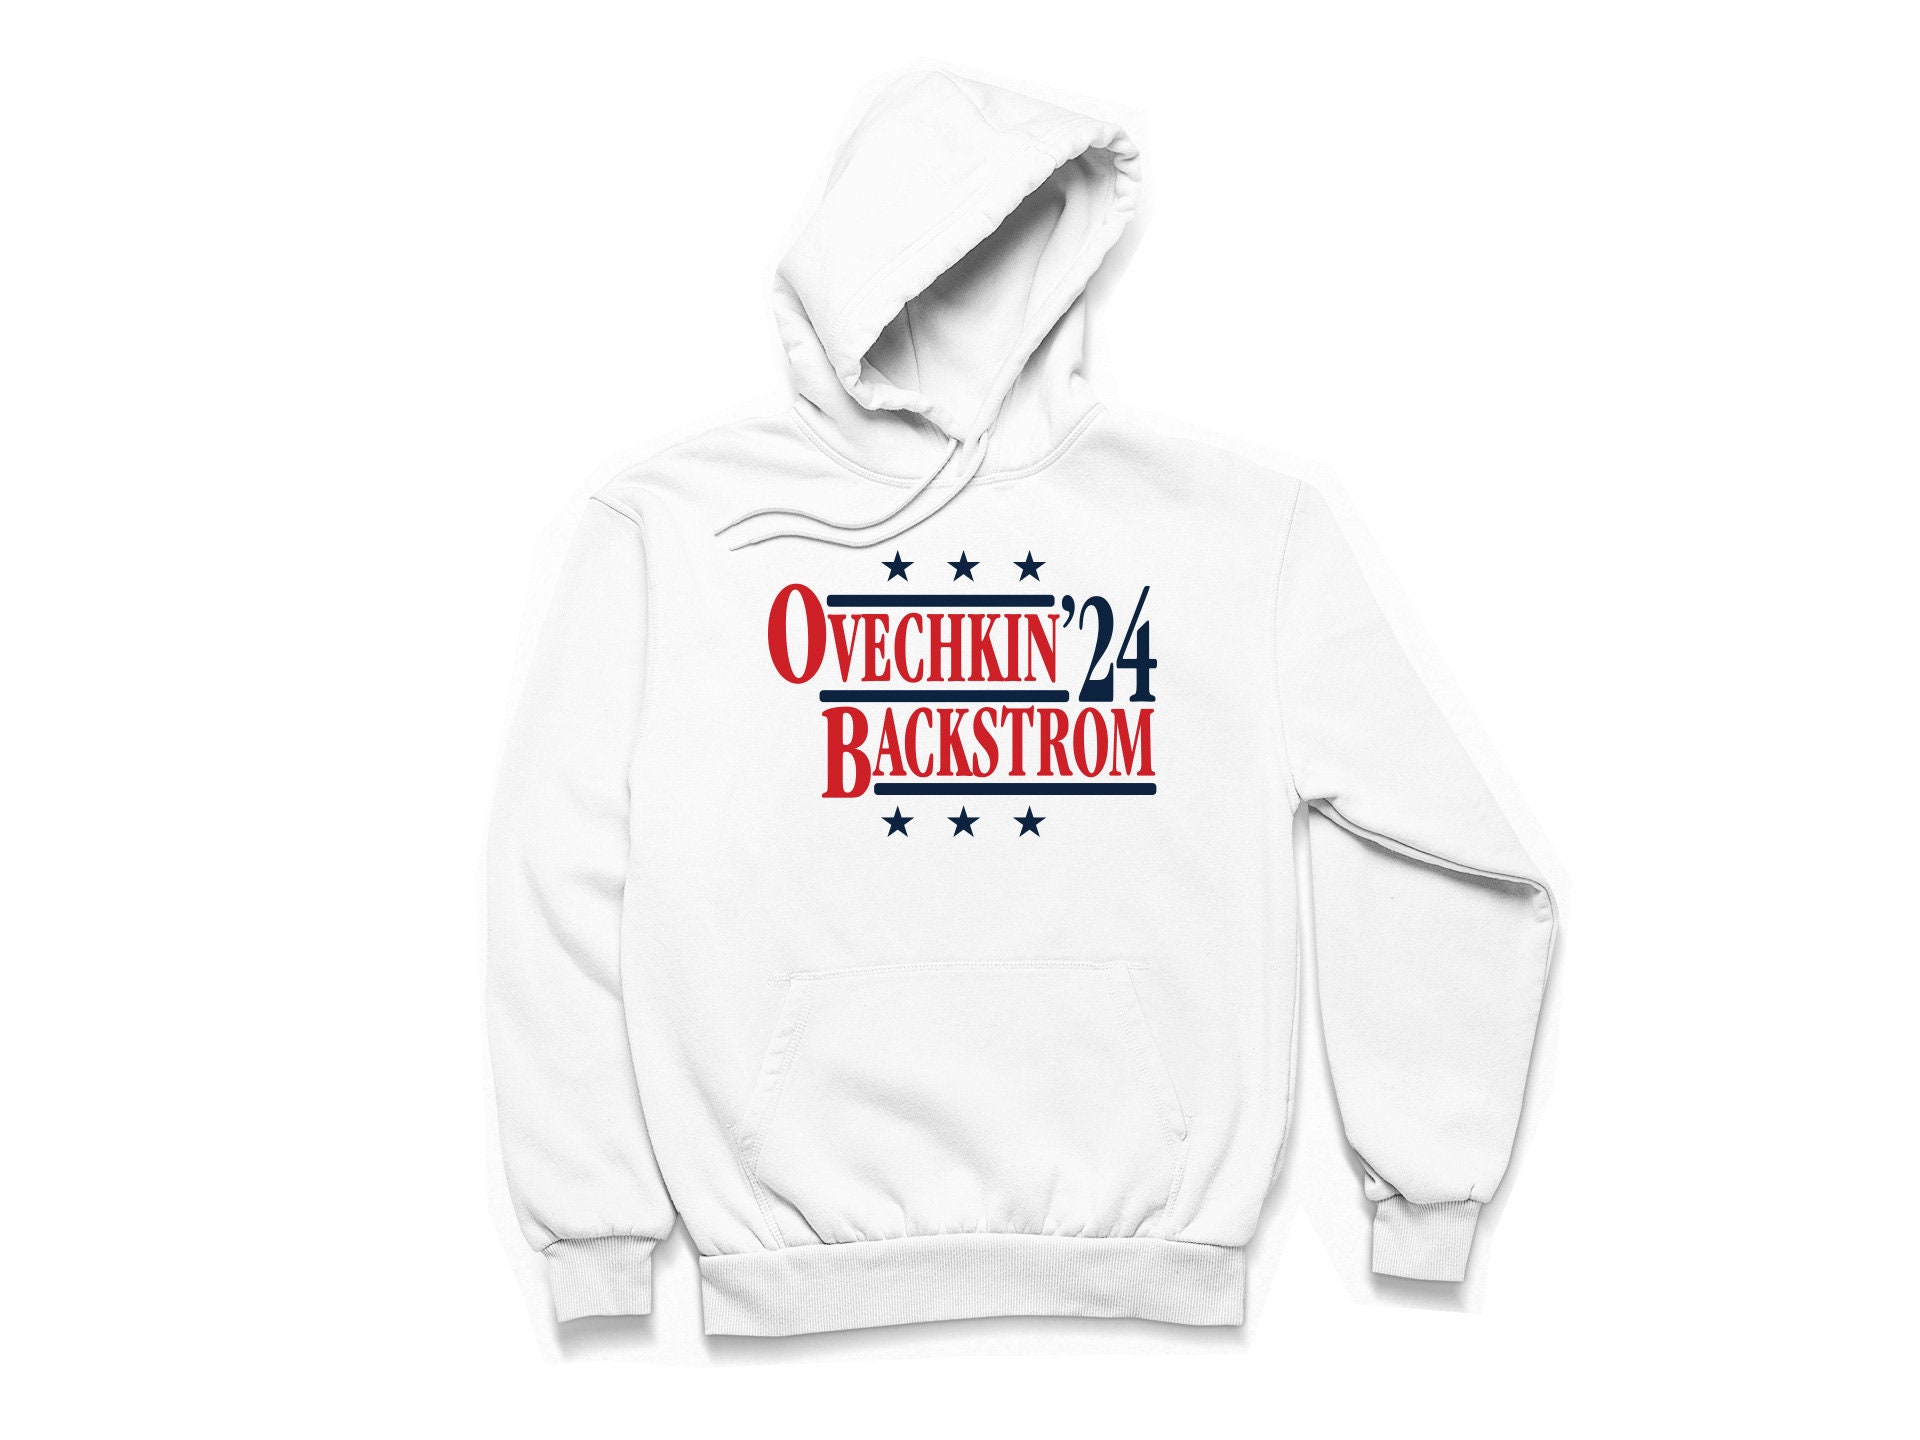 Ovechkin & Backstrom '24 - Washington Hockey Legends Political Campaign Parody T-Shirt - Hyper Than Hype Shirts S / Navy Shirt